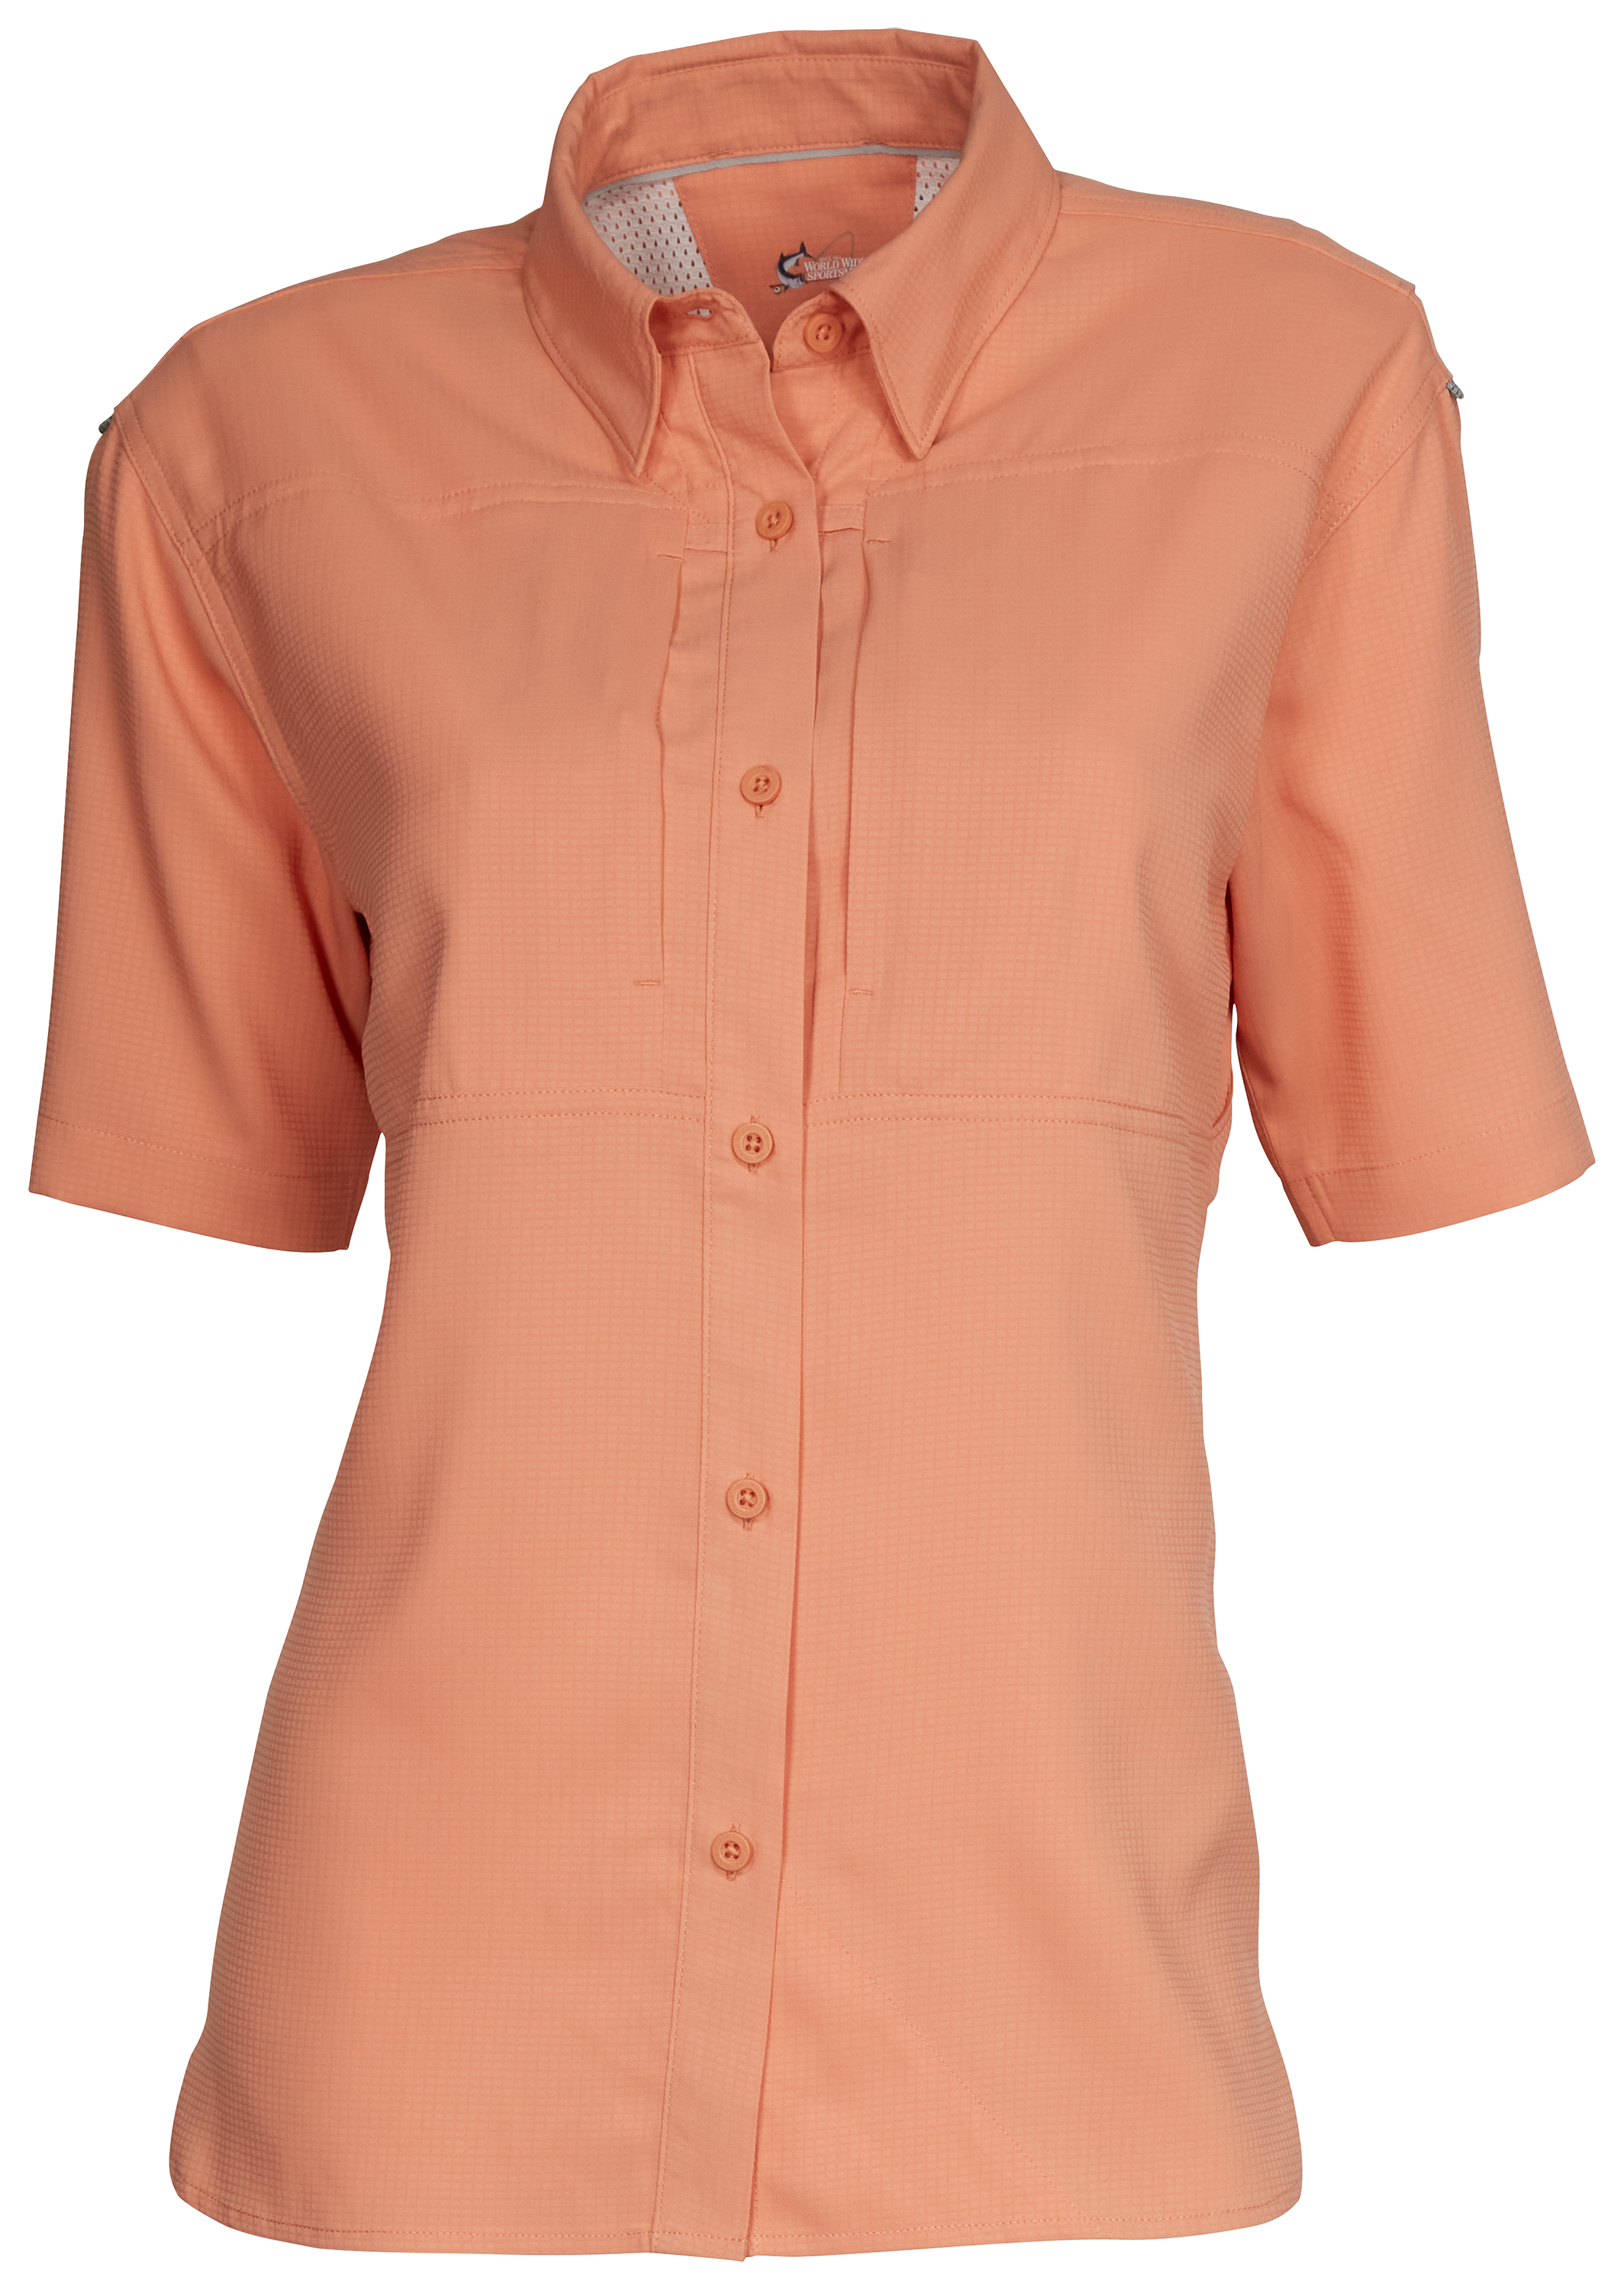 World Wide Sportsman Marina Short-Sleeve Shirt for Ladies - Canyon Sunset - XXL